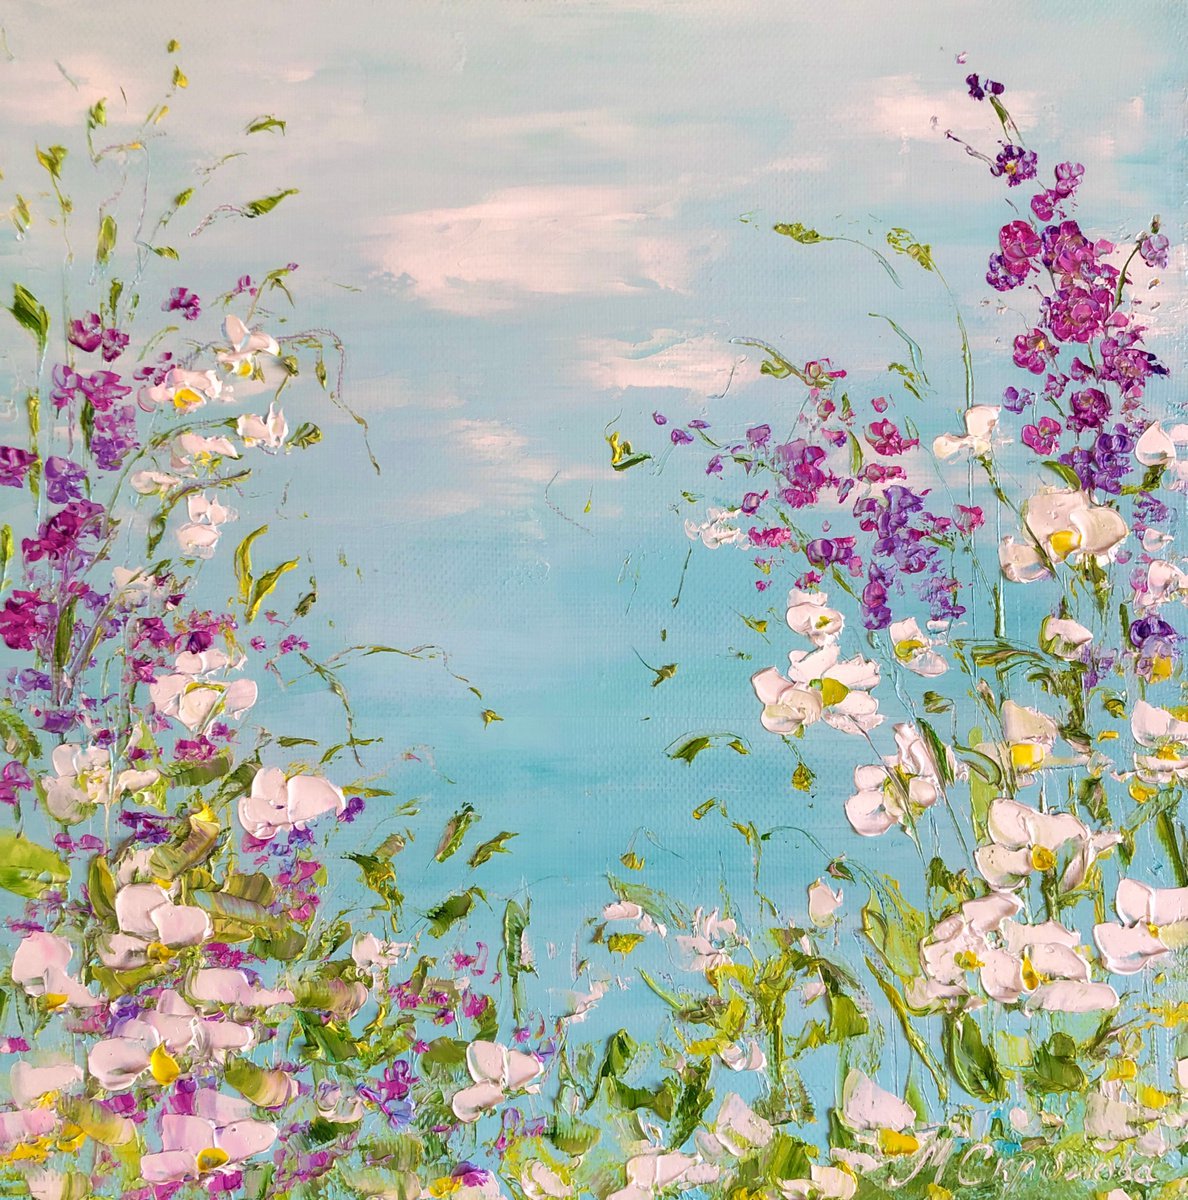 HEAVENLY FANTASY - Sky. Summer. Flowers. Clouds. Daisies. Meadow. Glade. Pink flowers. by Marina Skromova